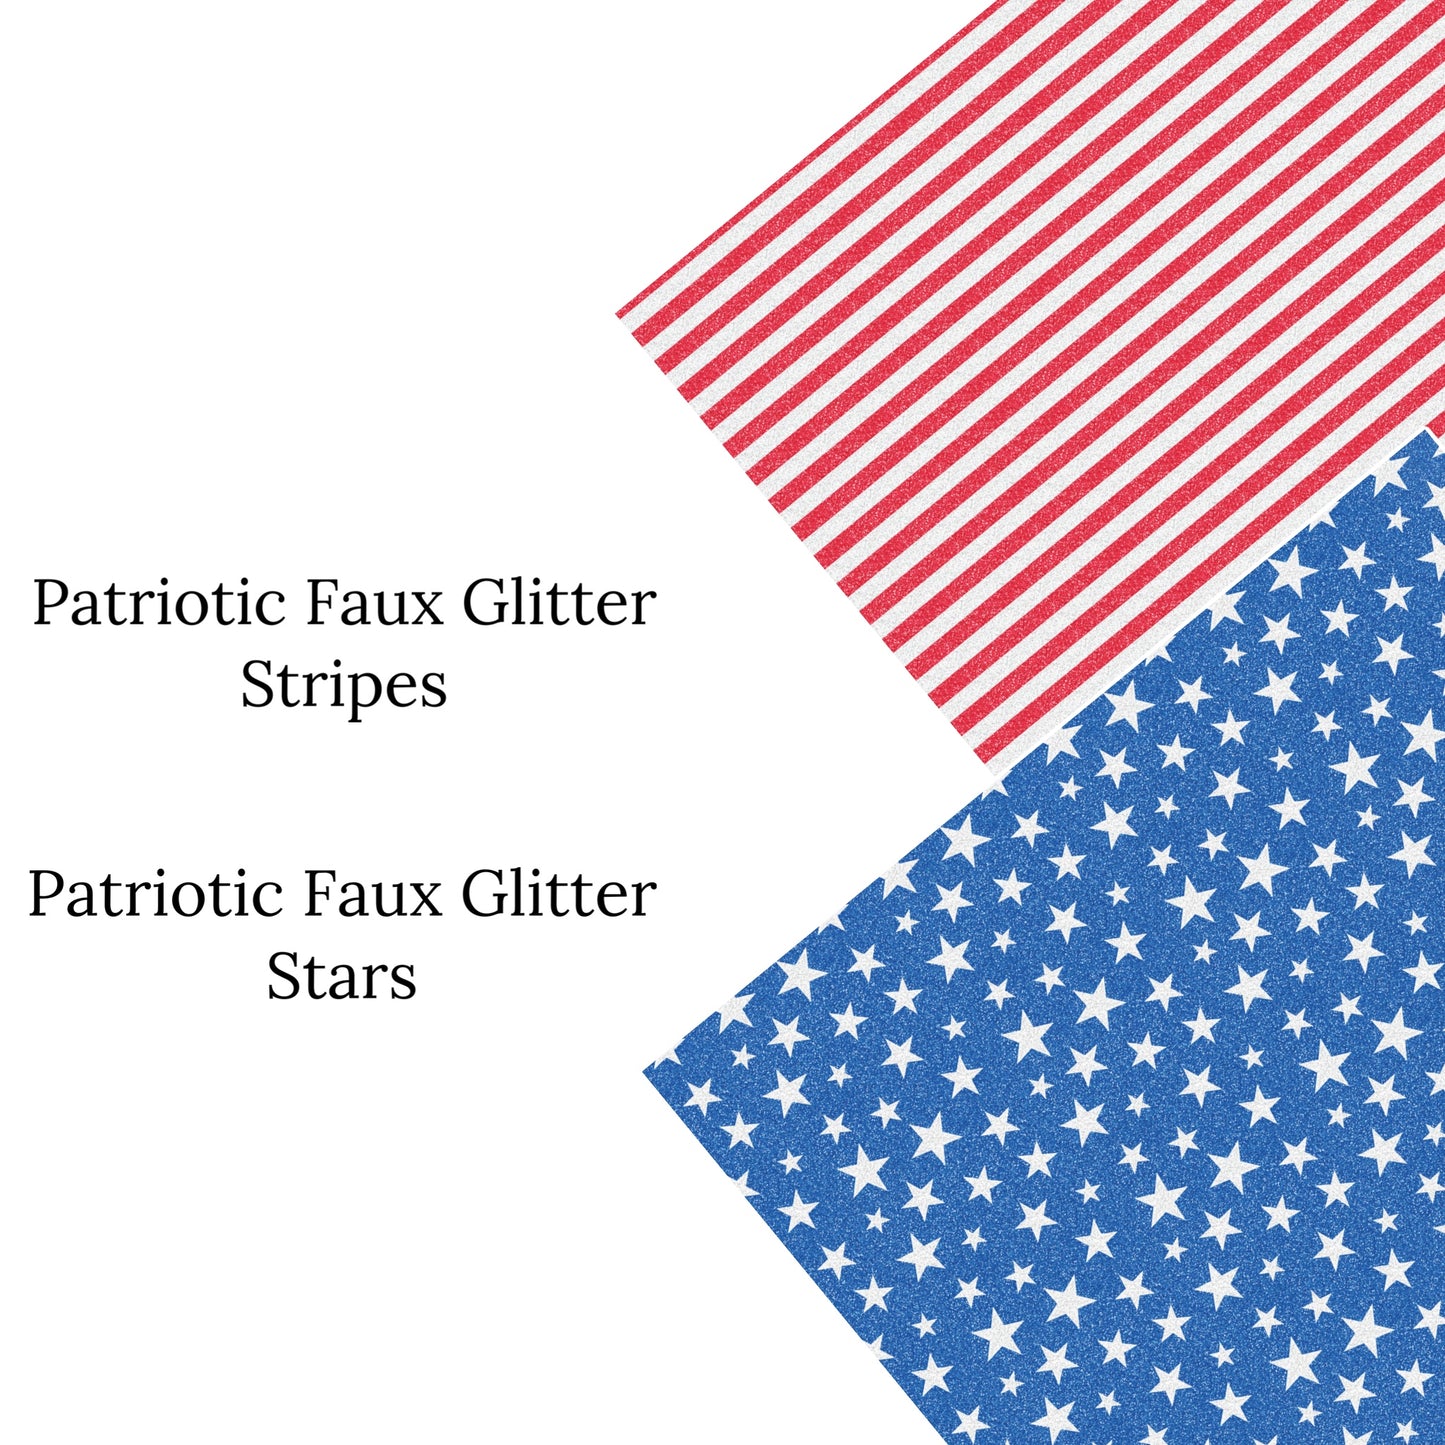 Patriotic Faux Glitter Stripes Faux Leather Sheets